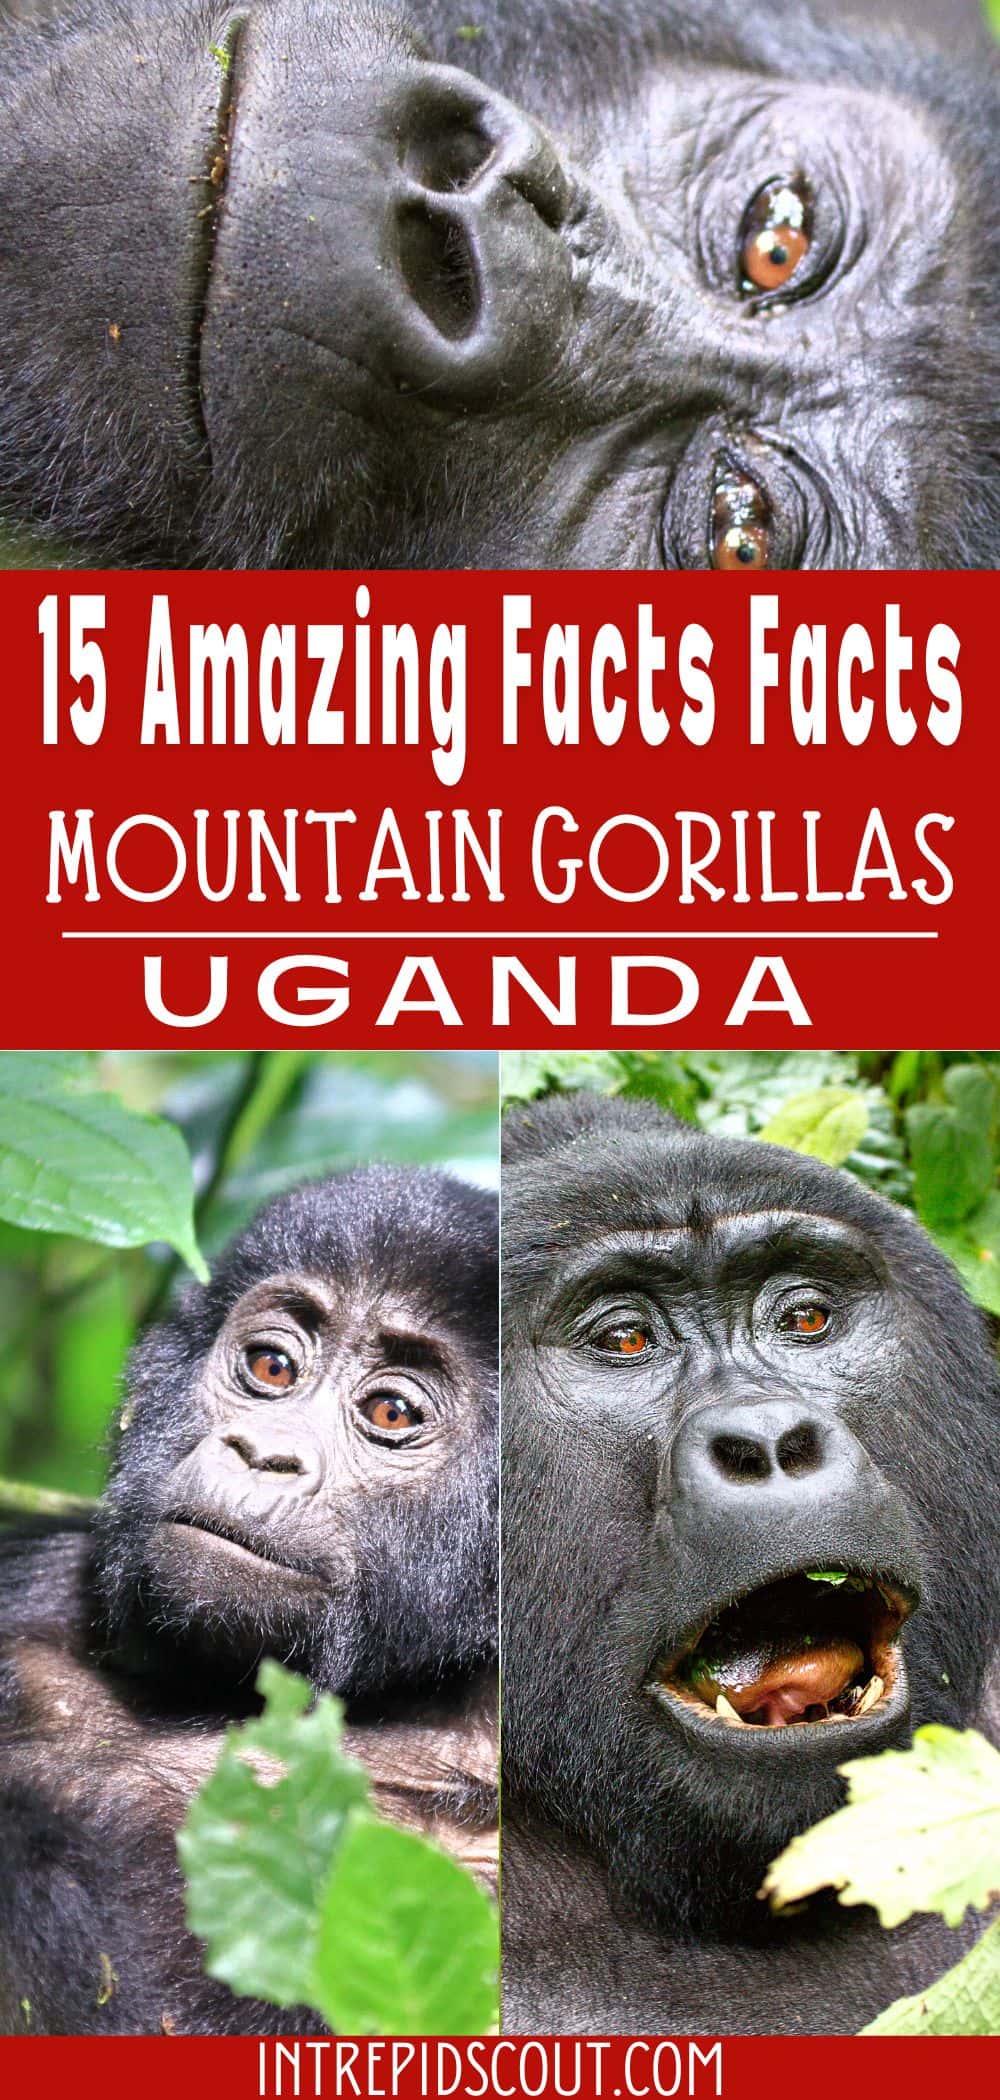 Facts About Mountain Gorillas in Uganda